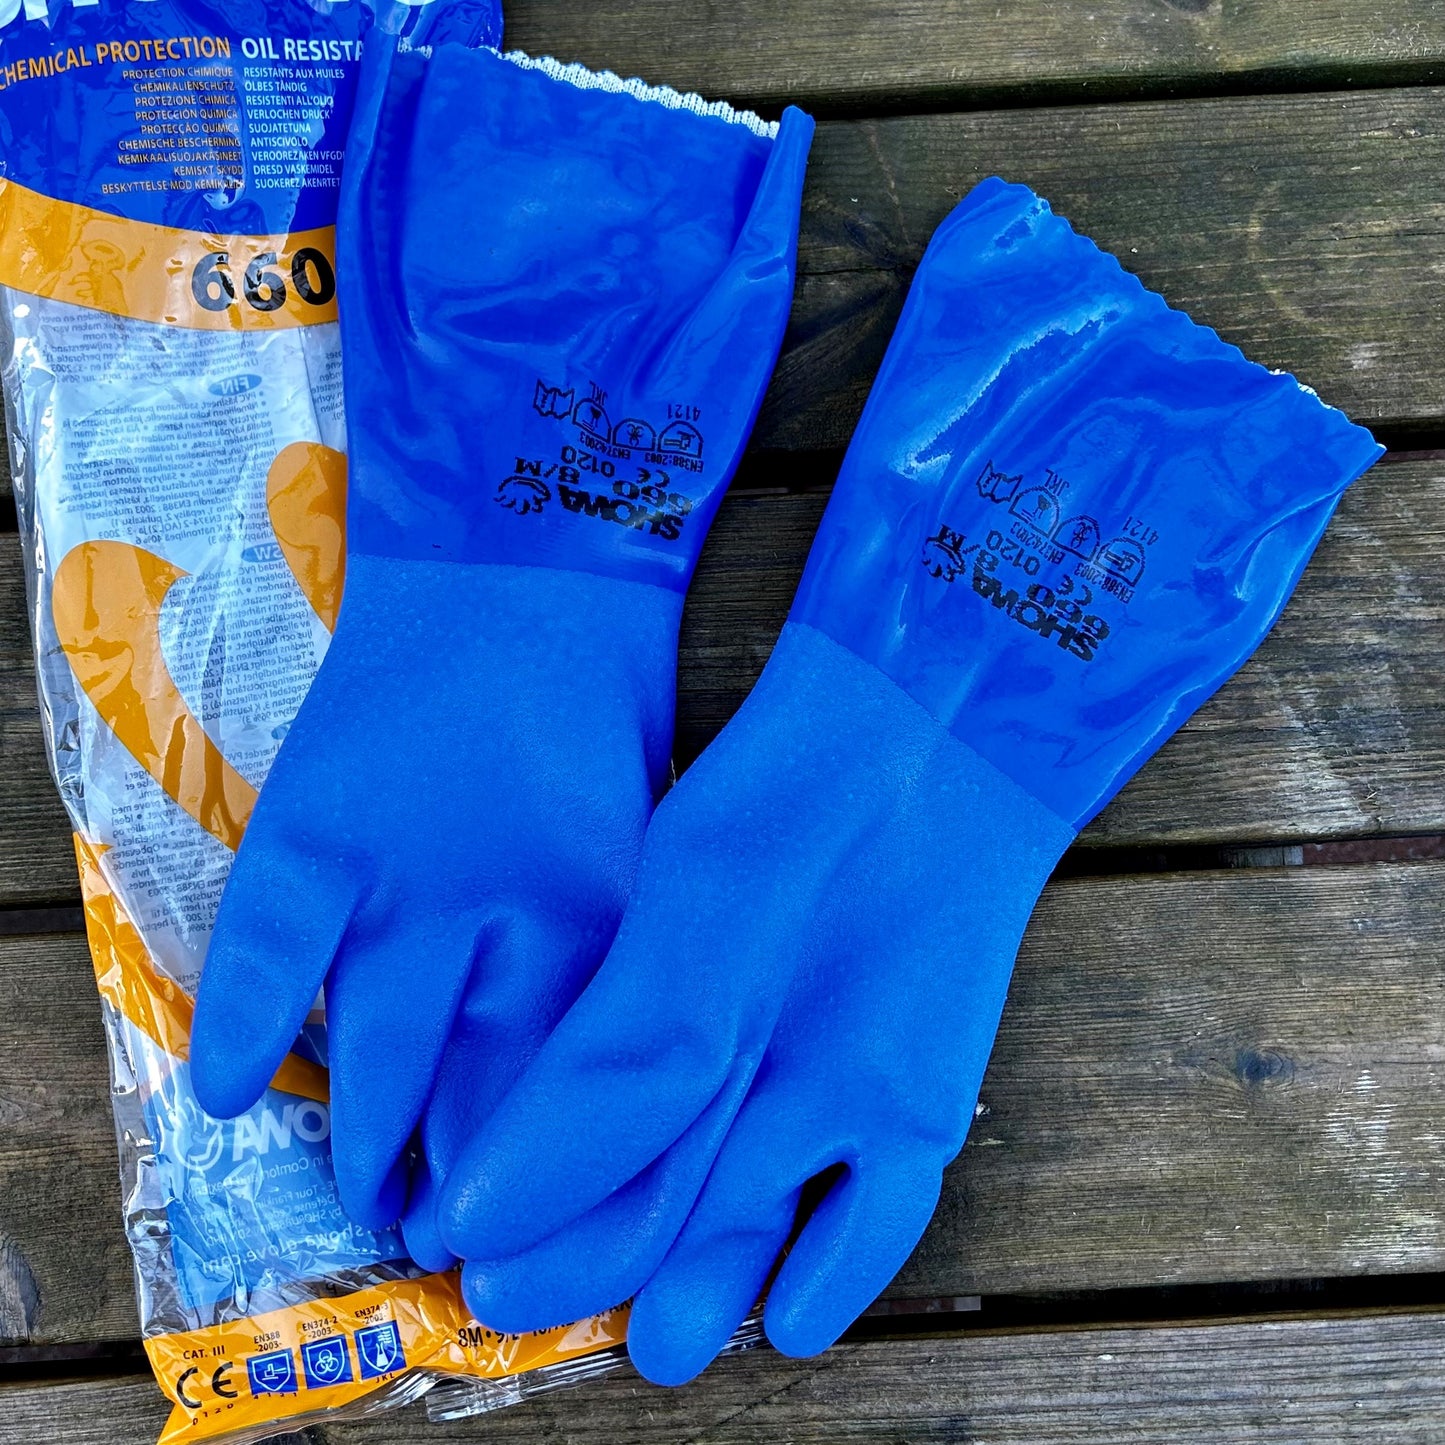 Medium Showa 660 Chemical Protection Gloves